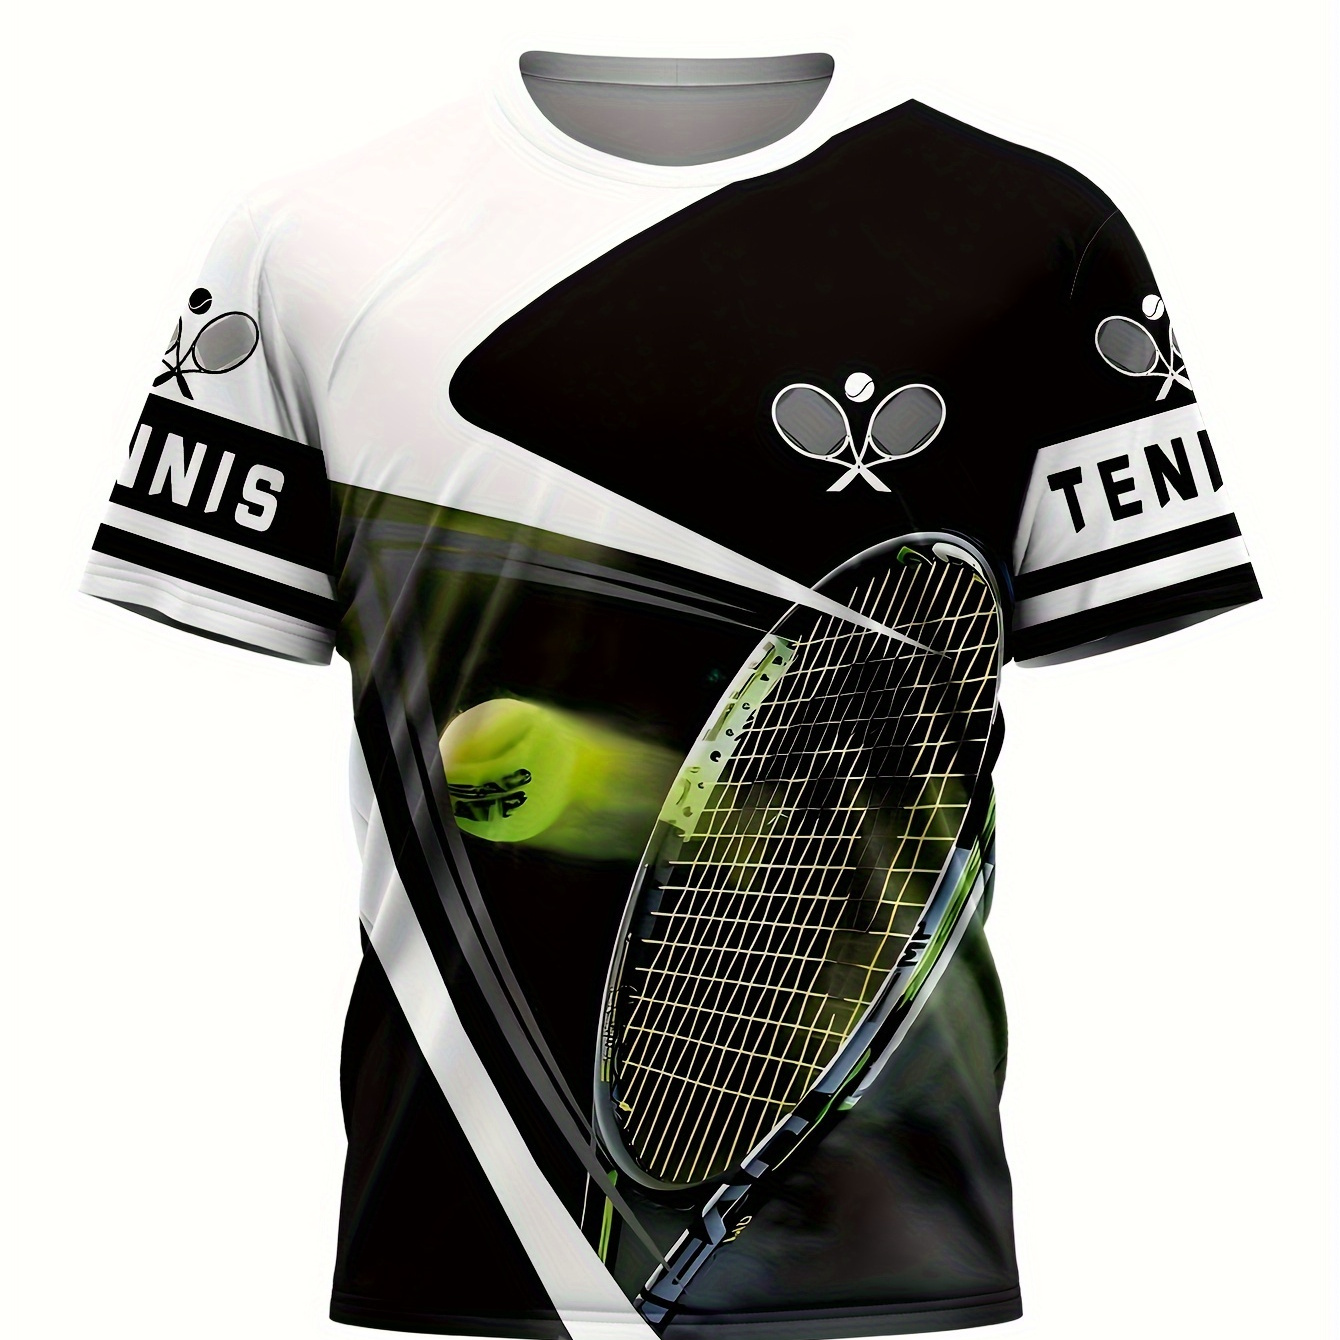 

Men's Tennis Graphic Print T-shirt, Short Sleeve Crew Neck Tee, Men's Clothing For Summer Outdoor